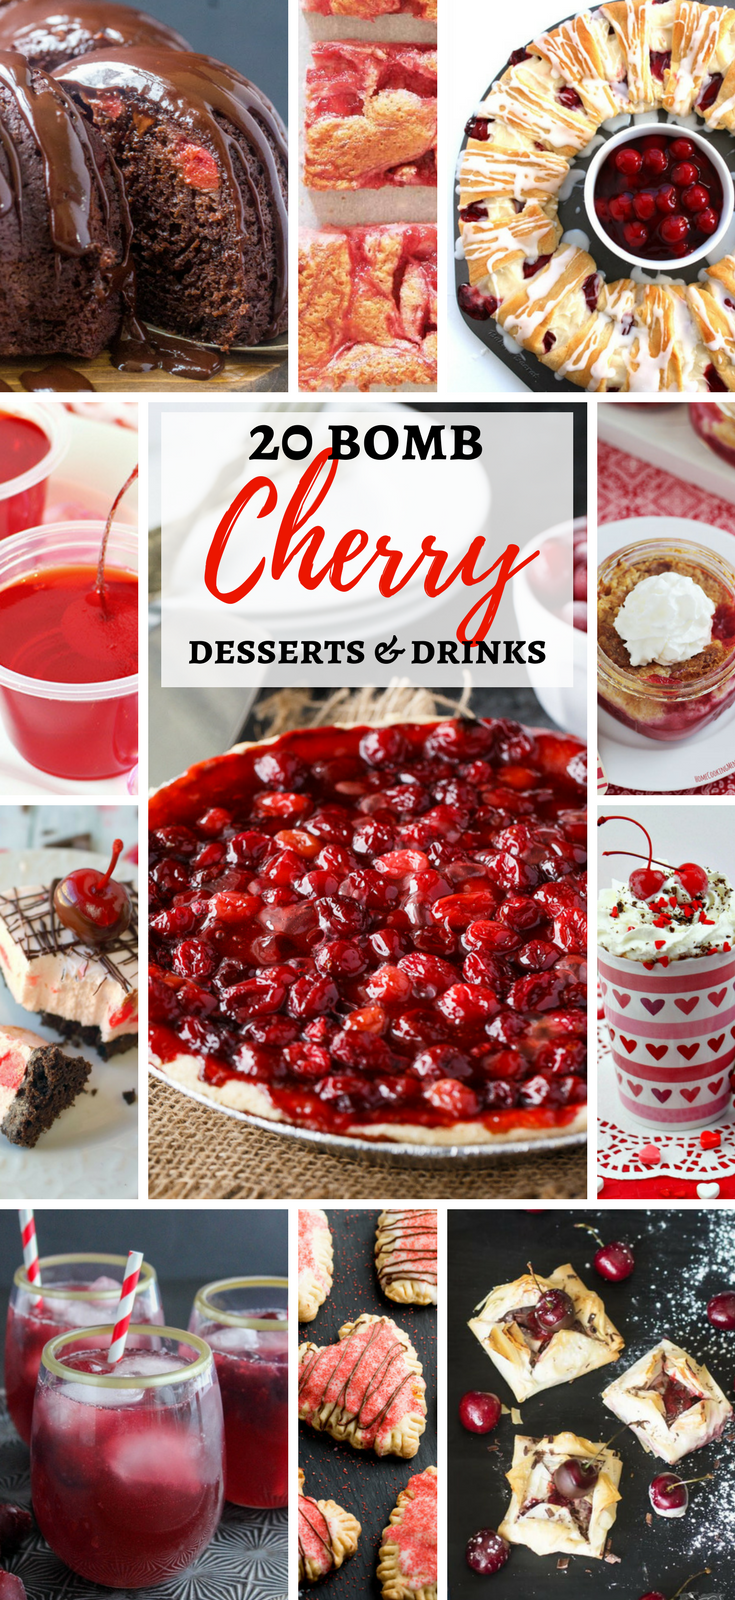 20 Bomb Cherry Desserts and Drinks - cherry pies, cakes, bread, drinks and more! #cherrydesserts